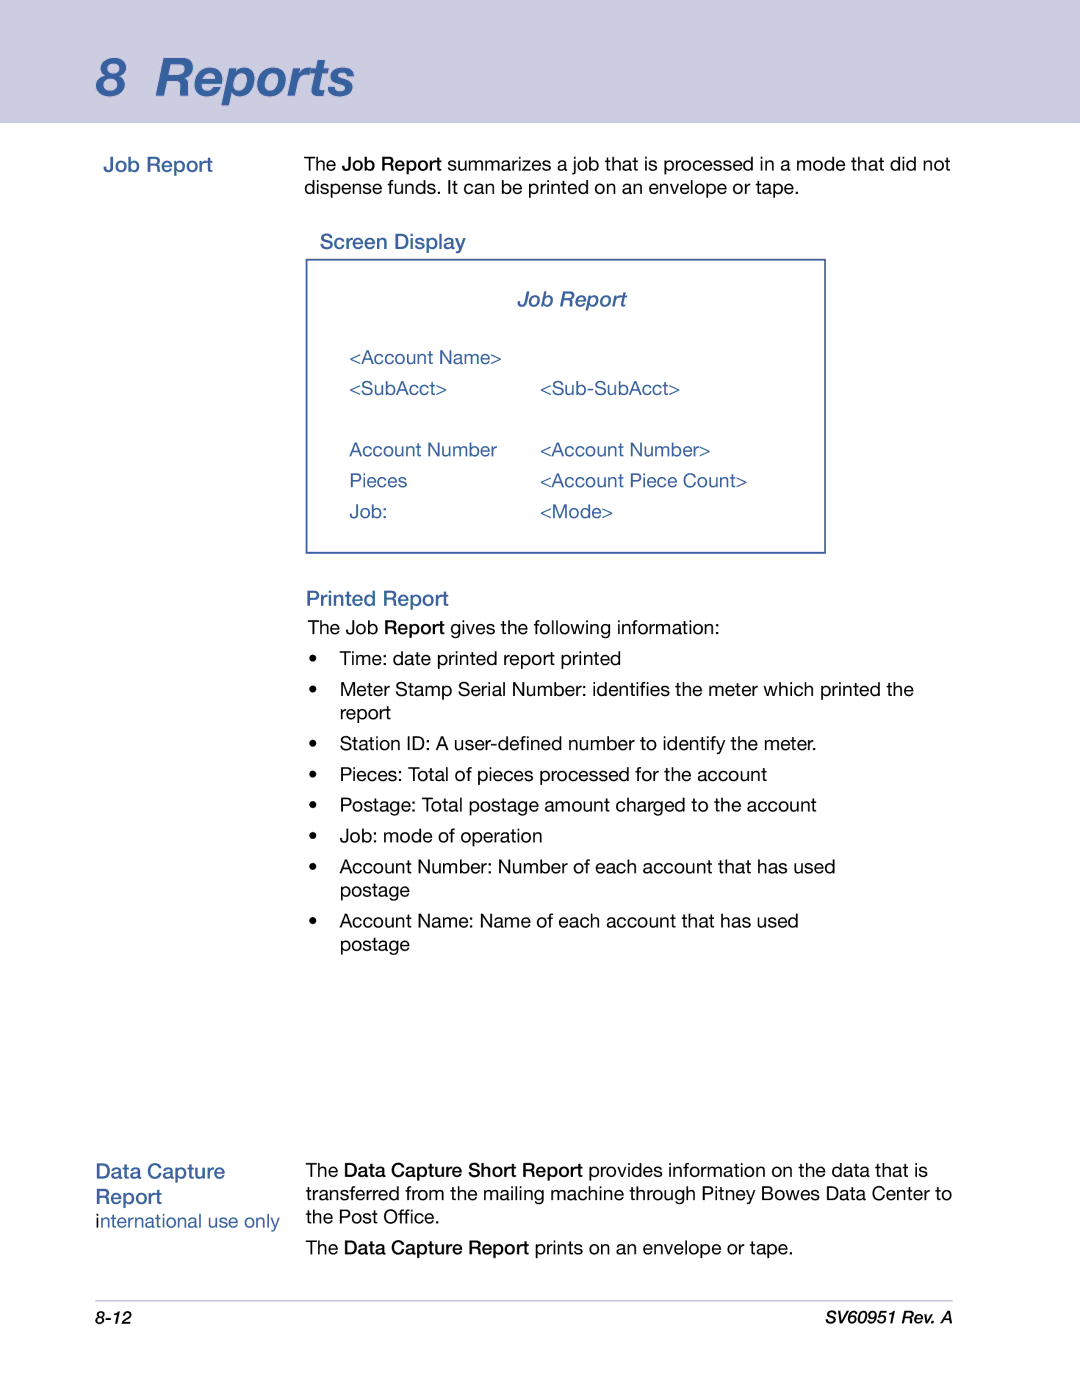 Pitney Bowes DM1000 manual Job Report, Data Capture Report 